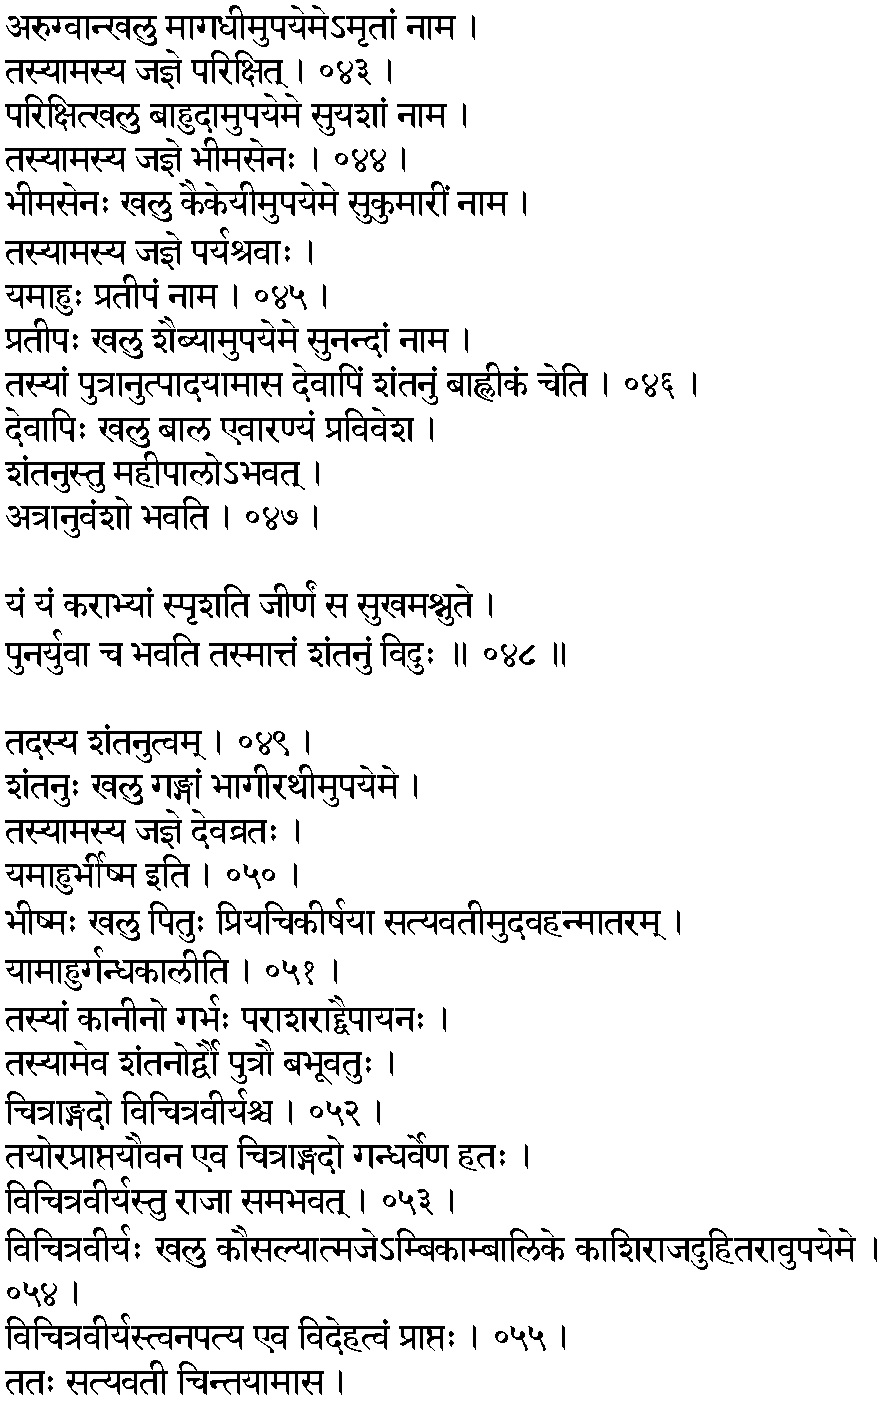 श्रीमद् महाभारतं / Srimad Mahabharata: IMPORTANT SLOKAS IN SANSKRIT ...